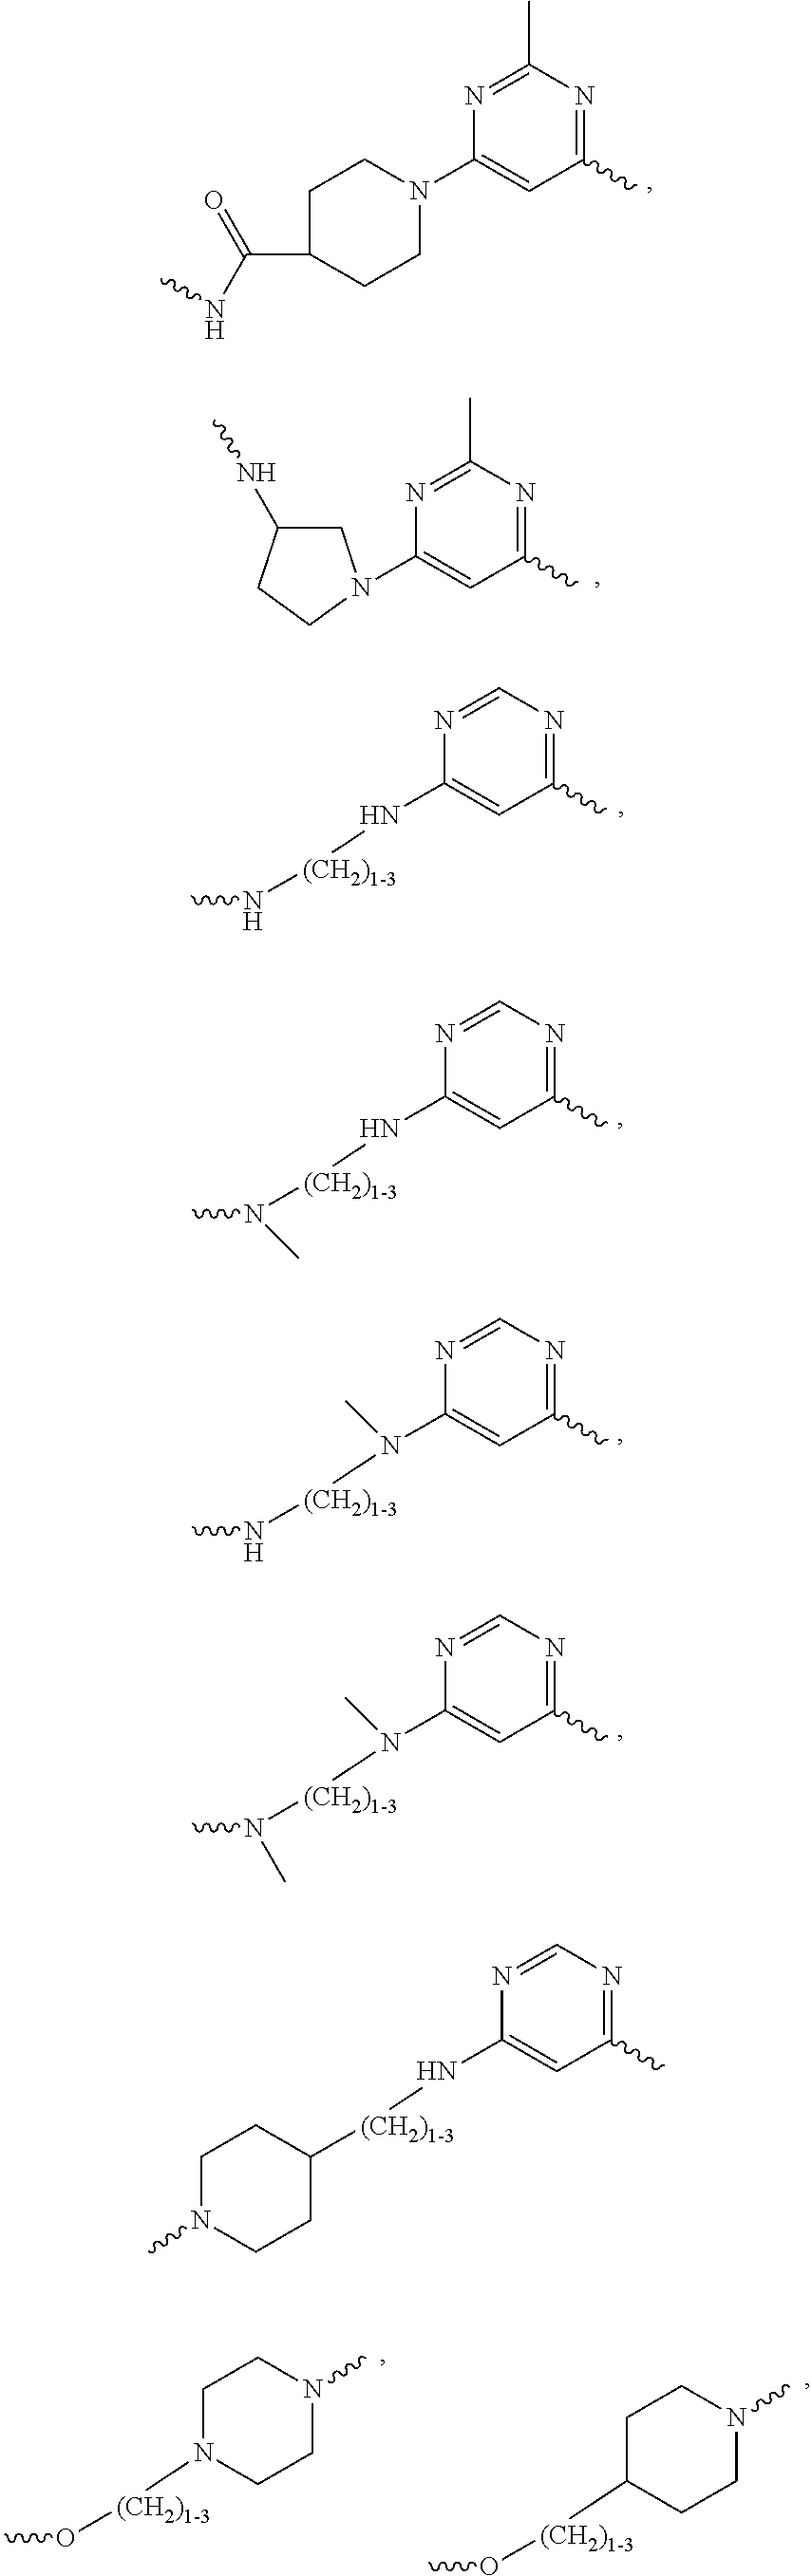 Oligomer-protein tyrosine kinase inhibitor conjugates